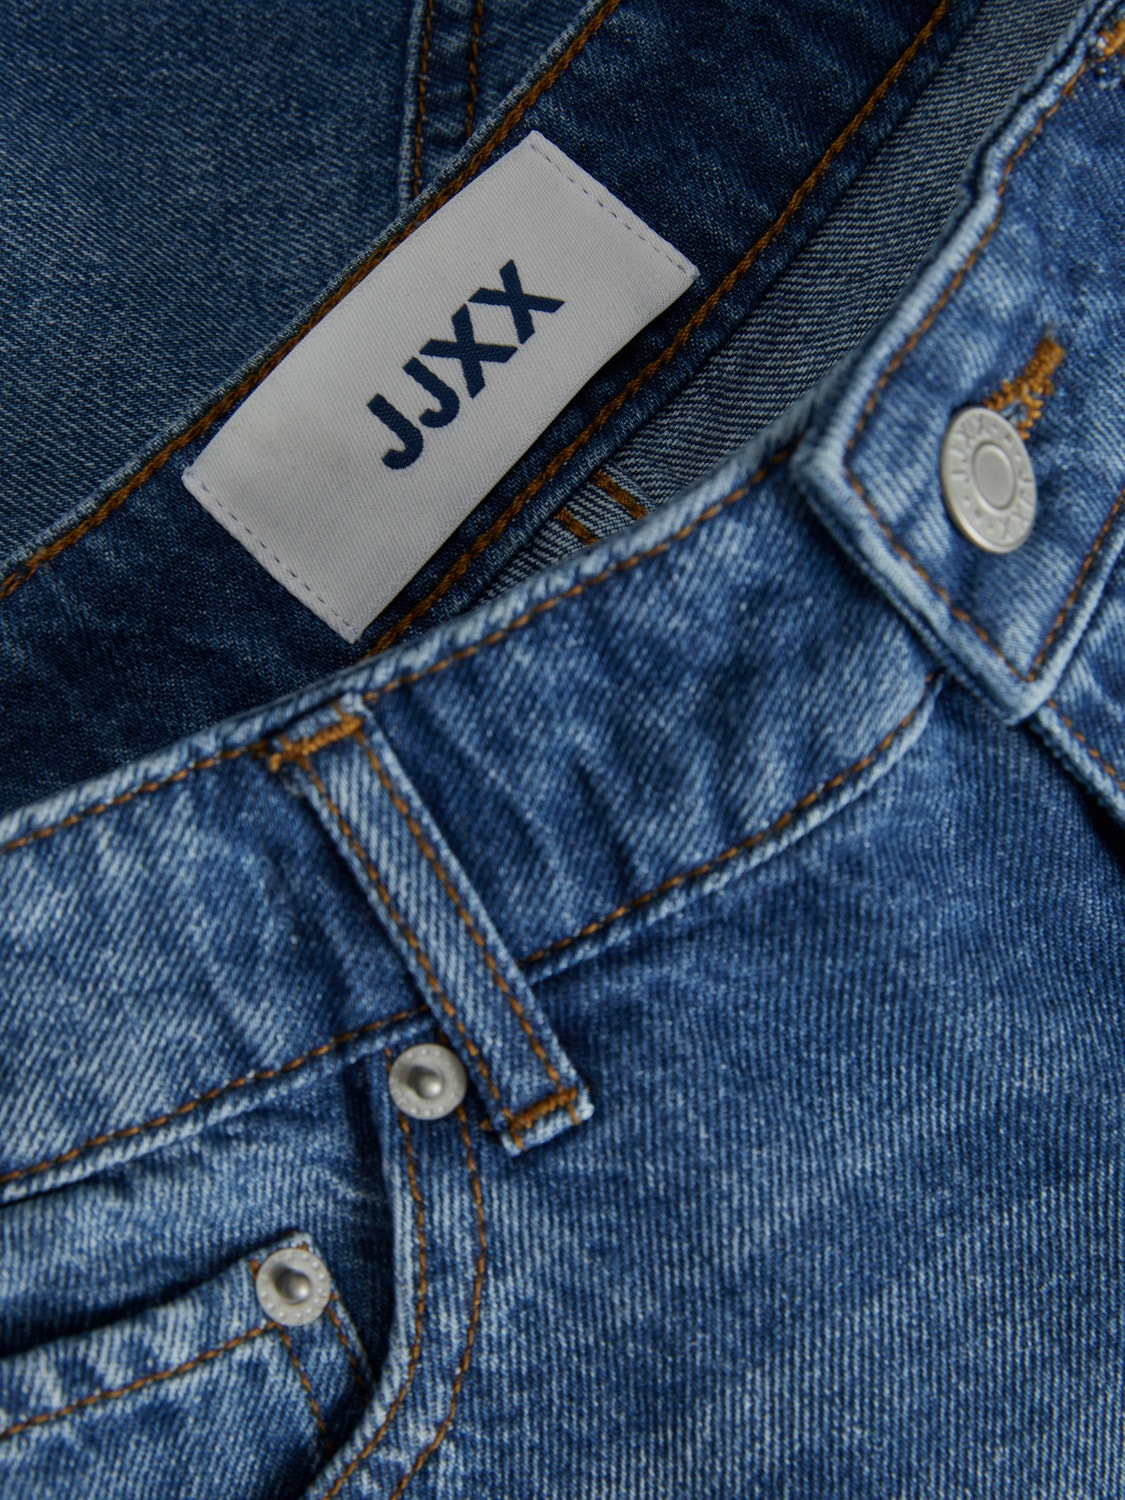 JJXX Regular Fit Denim σορτς -Medium Blue Denim - 12227837